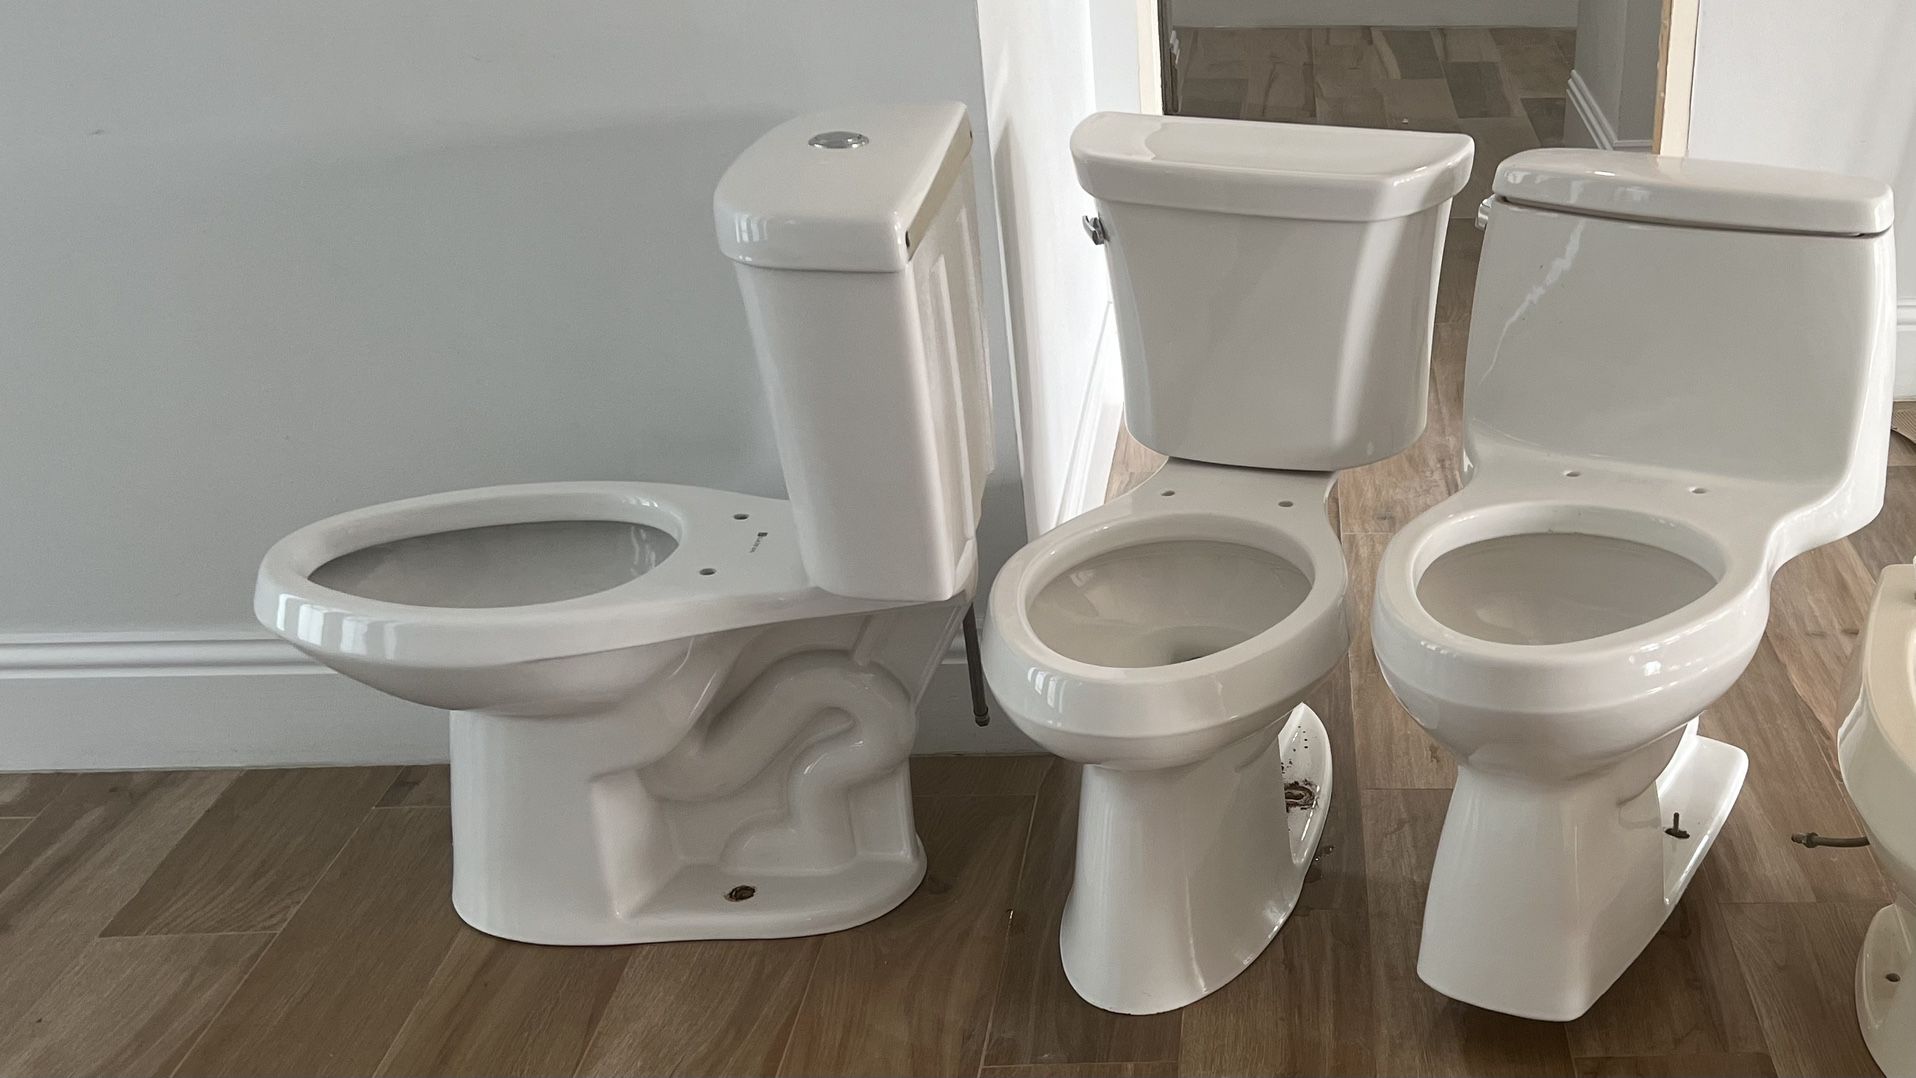 3 Toilets